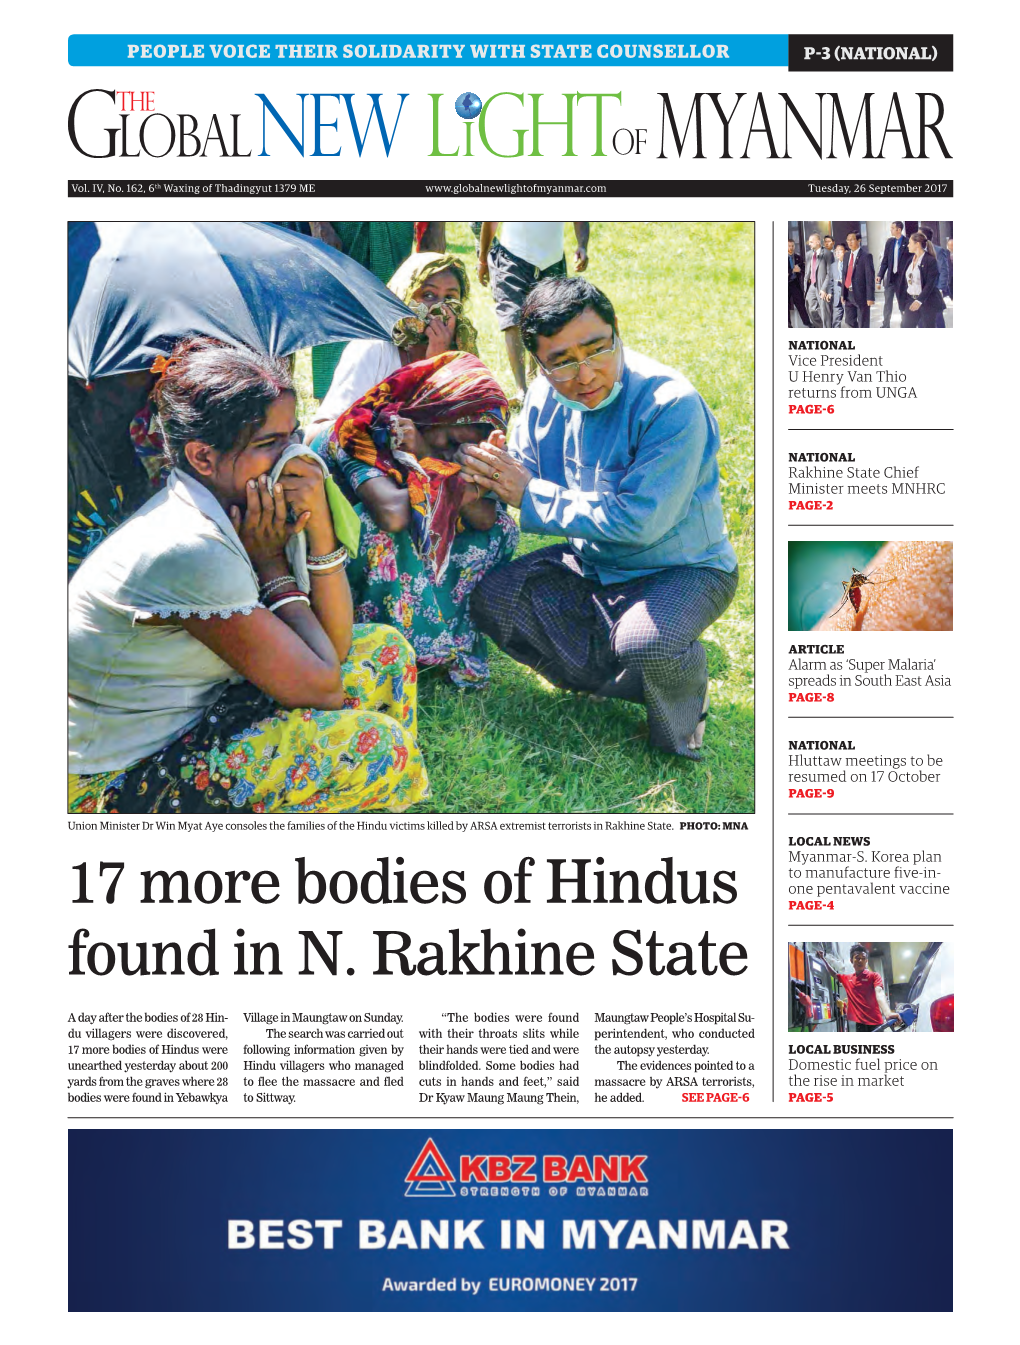 17 More Bodies of Hindus Found in N. Rakhine State